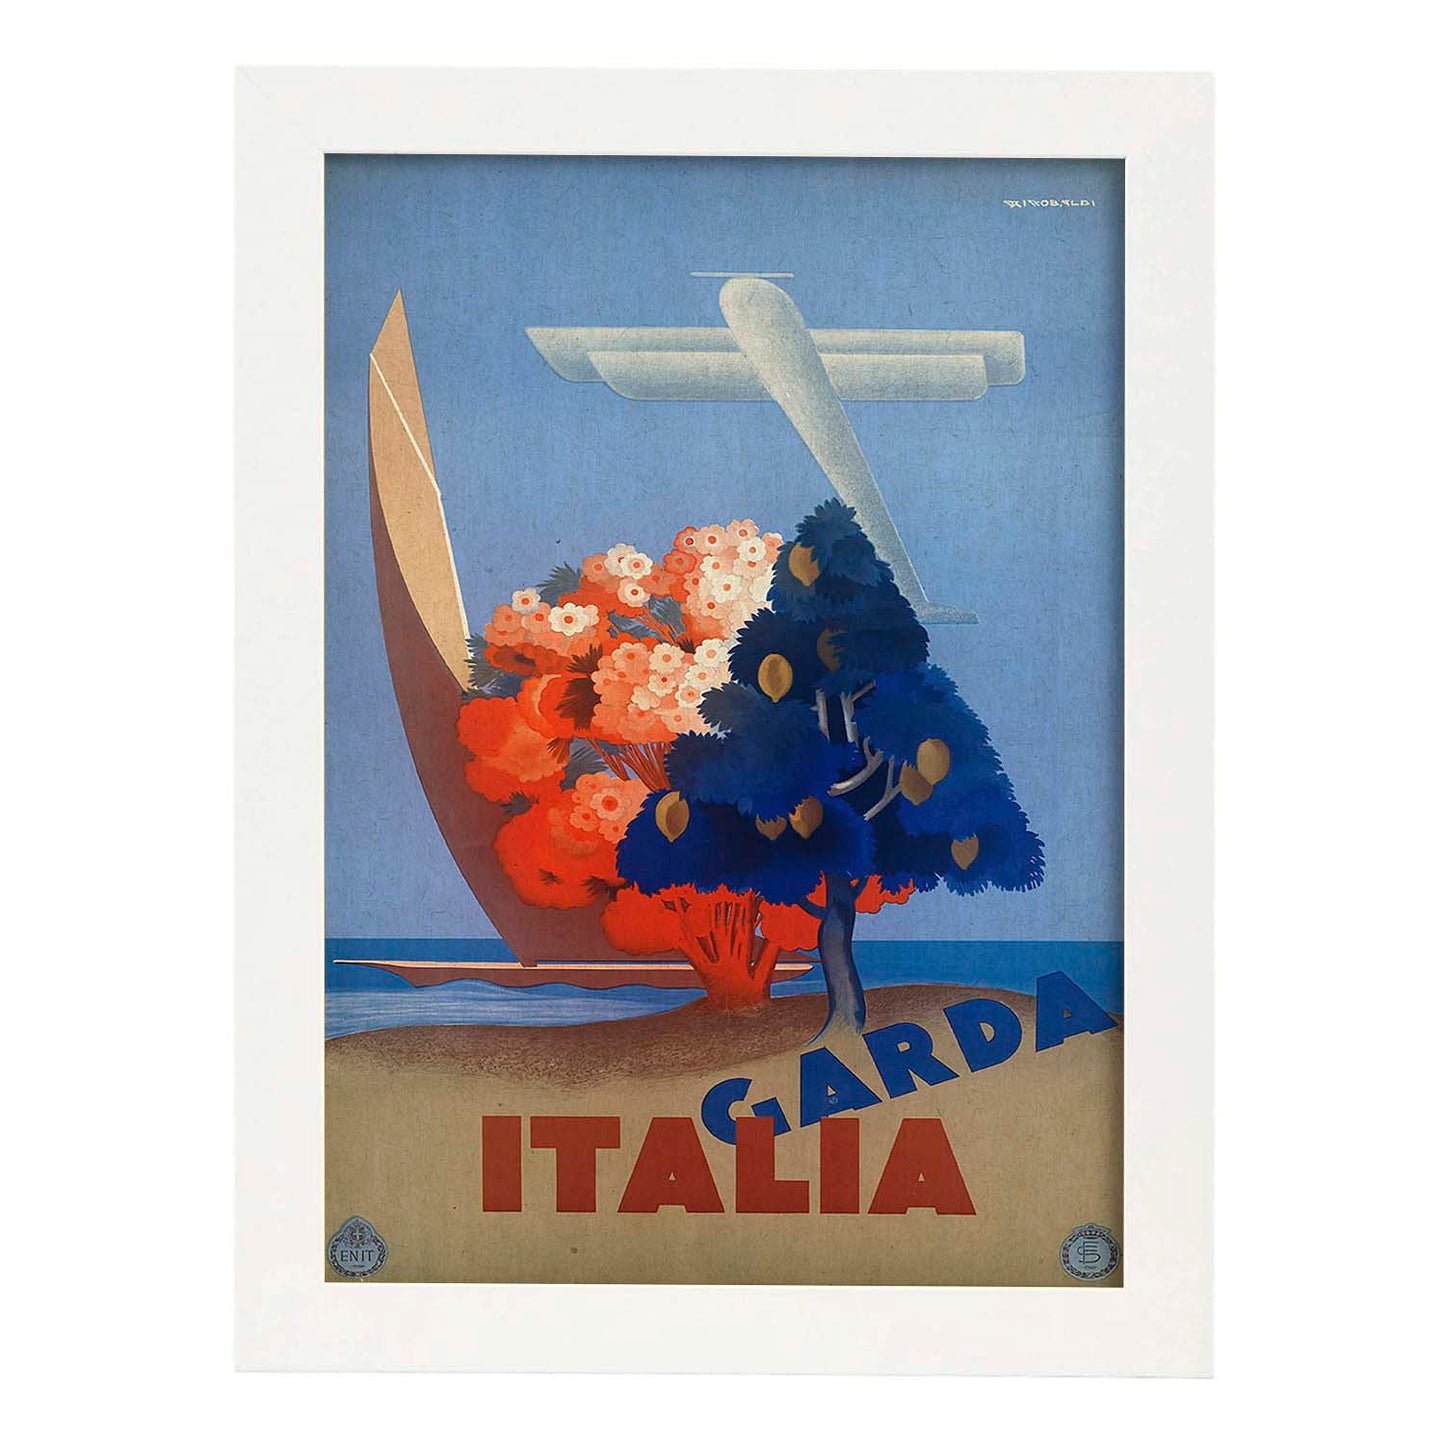 Poster vintage. Cartel vintage de Francia e Italia. Viaja a Grada.-Artwork-Nacnic-A4-Marco Blanco-Nacnic Estudio SL